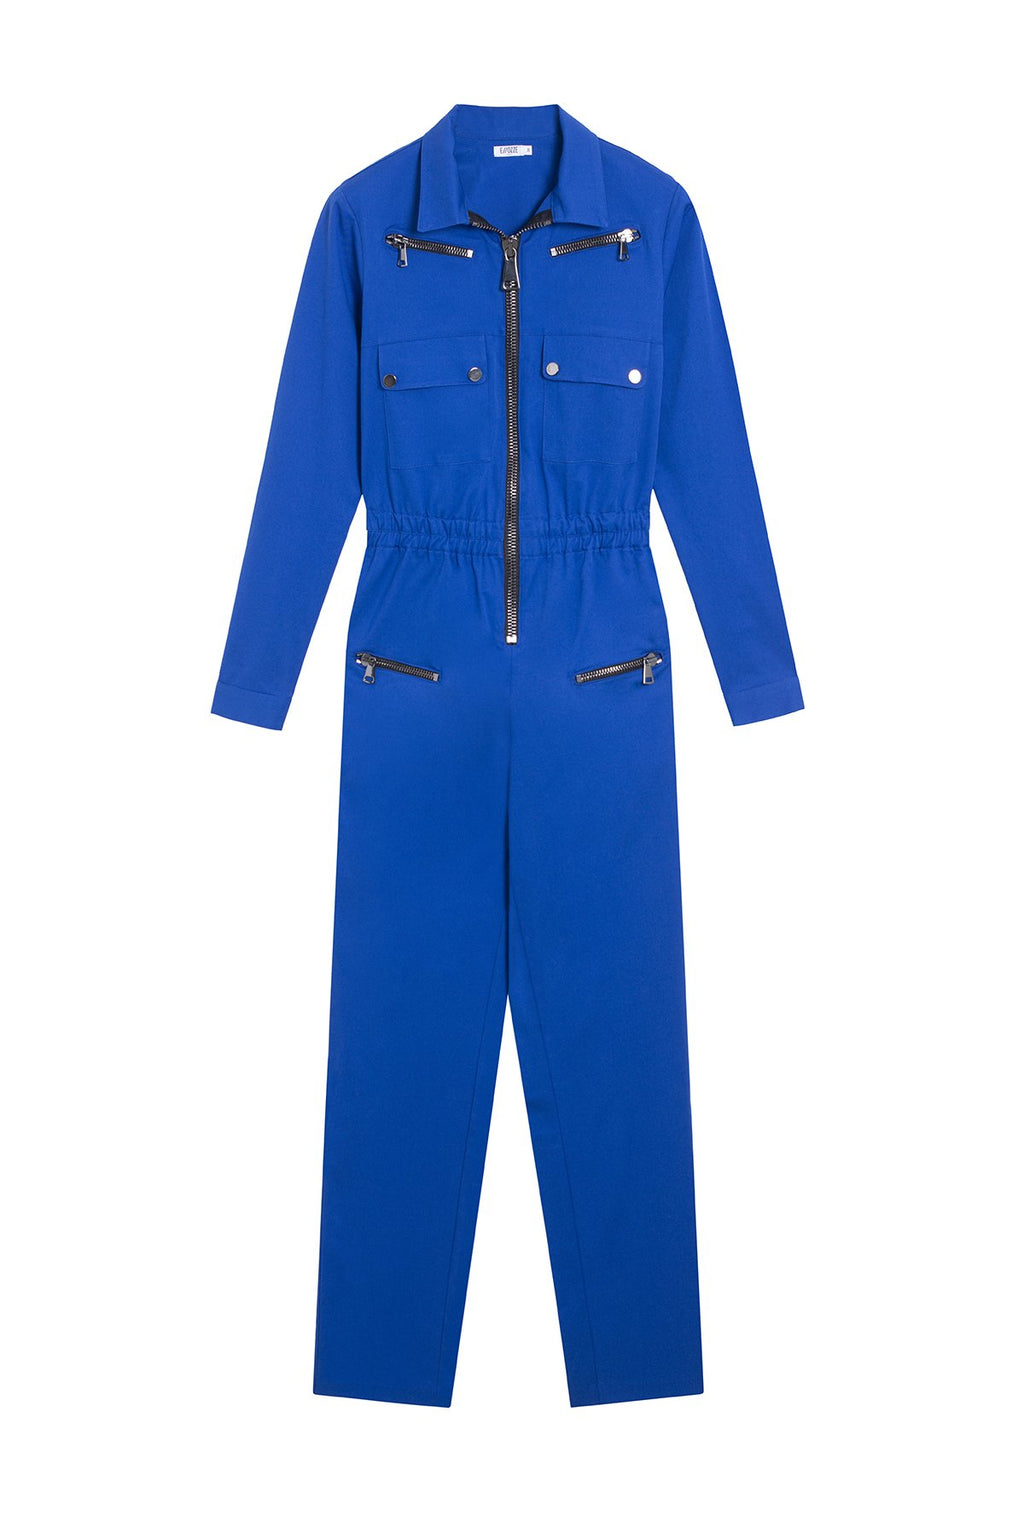 Navy blue elegant longsleeves jumpsuit - Overalls